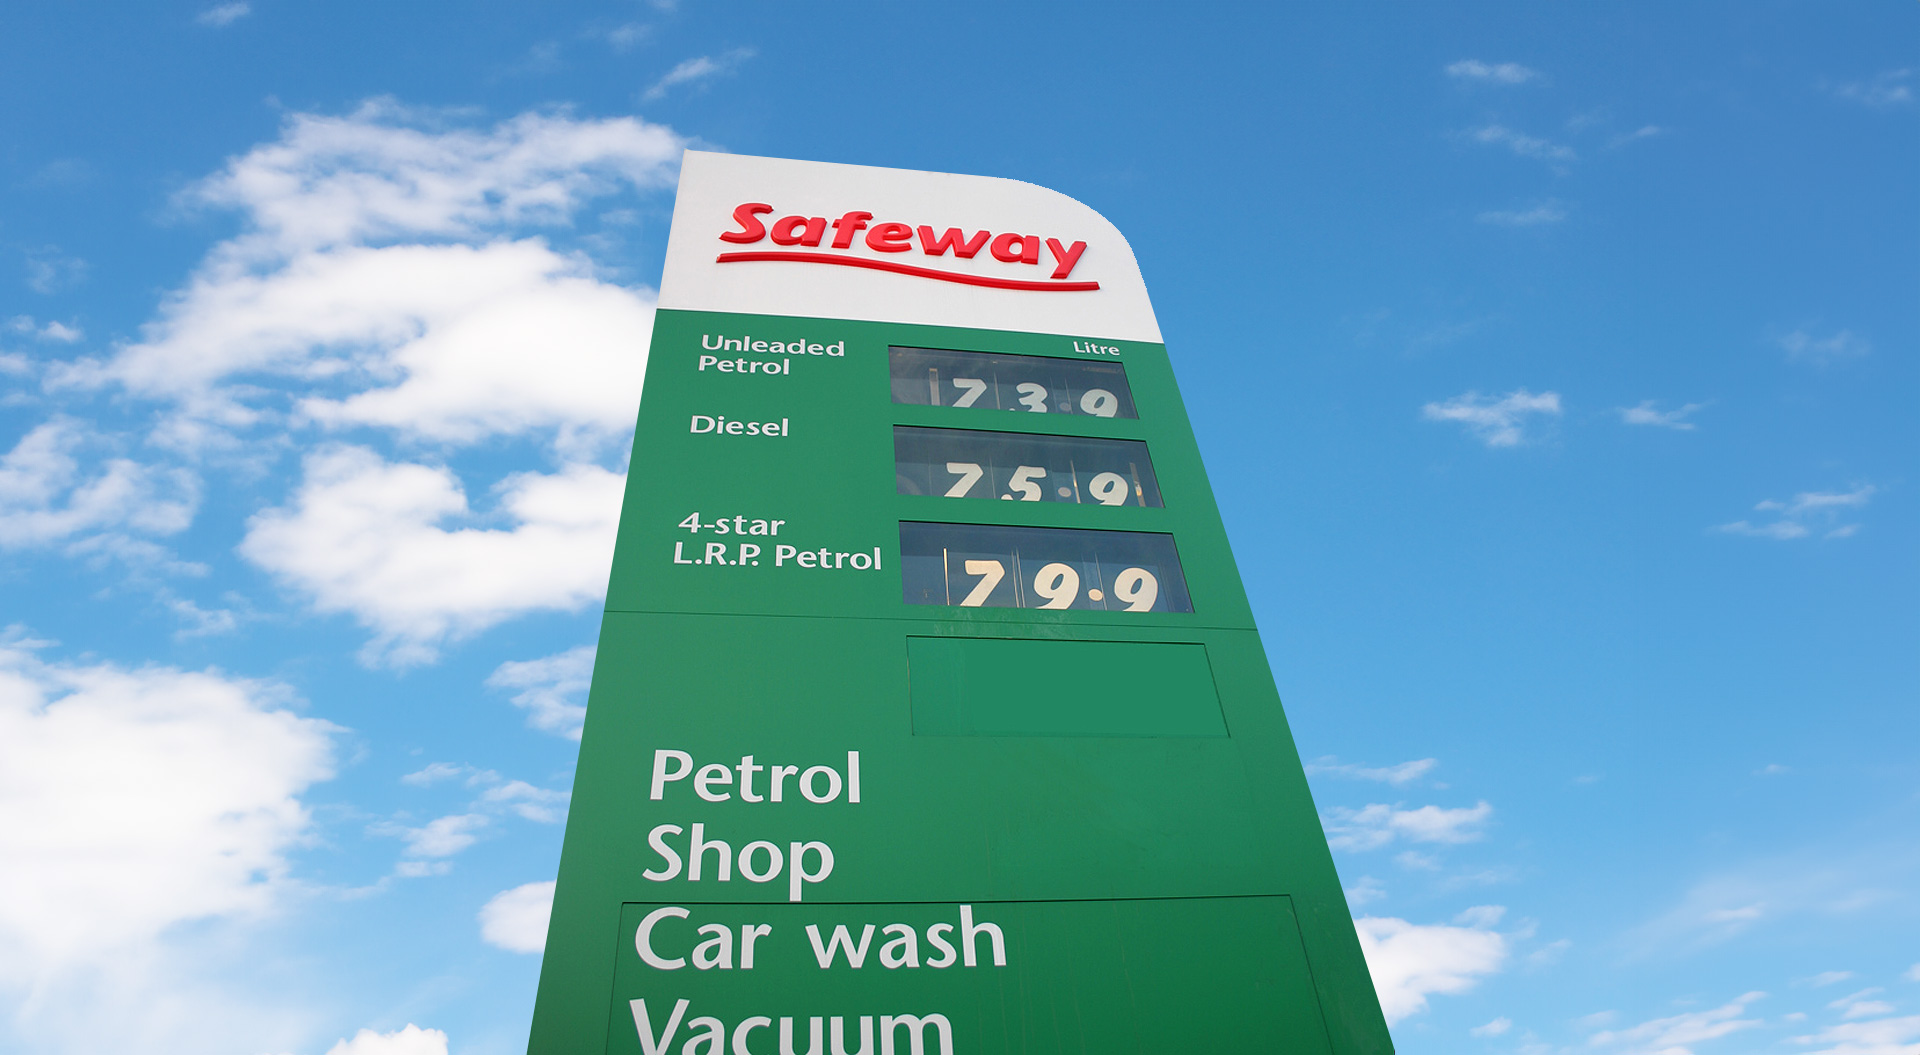 Safeway Petrol forecourt branding and totem design